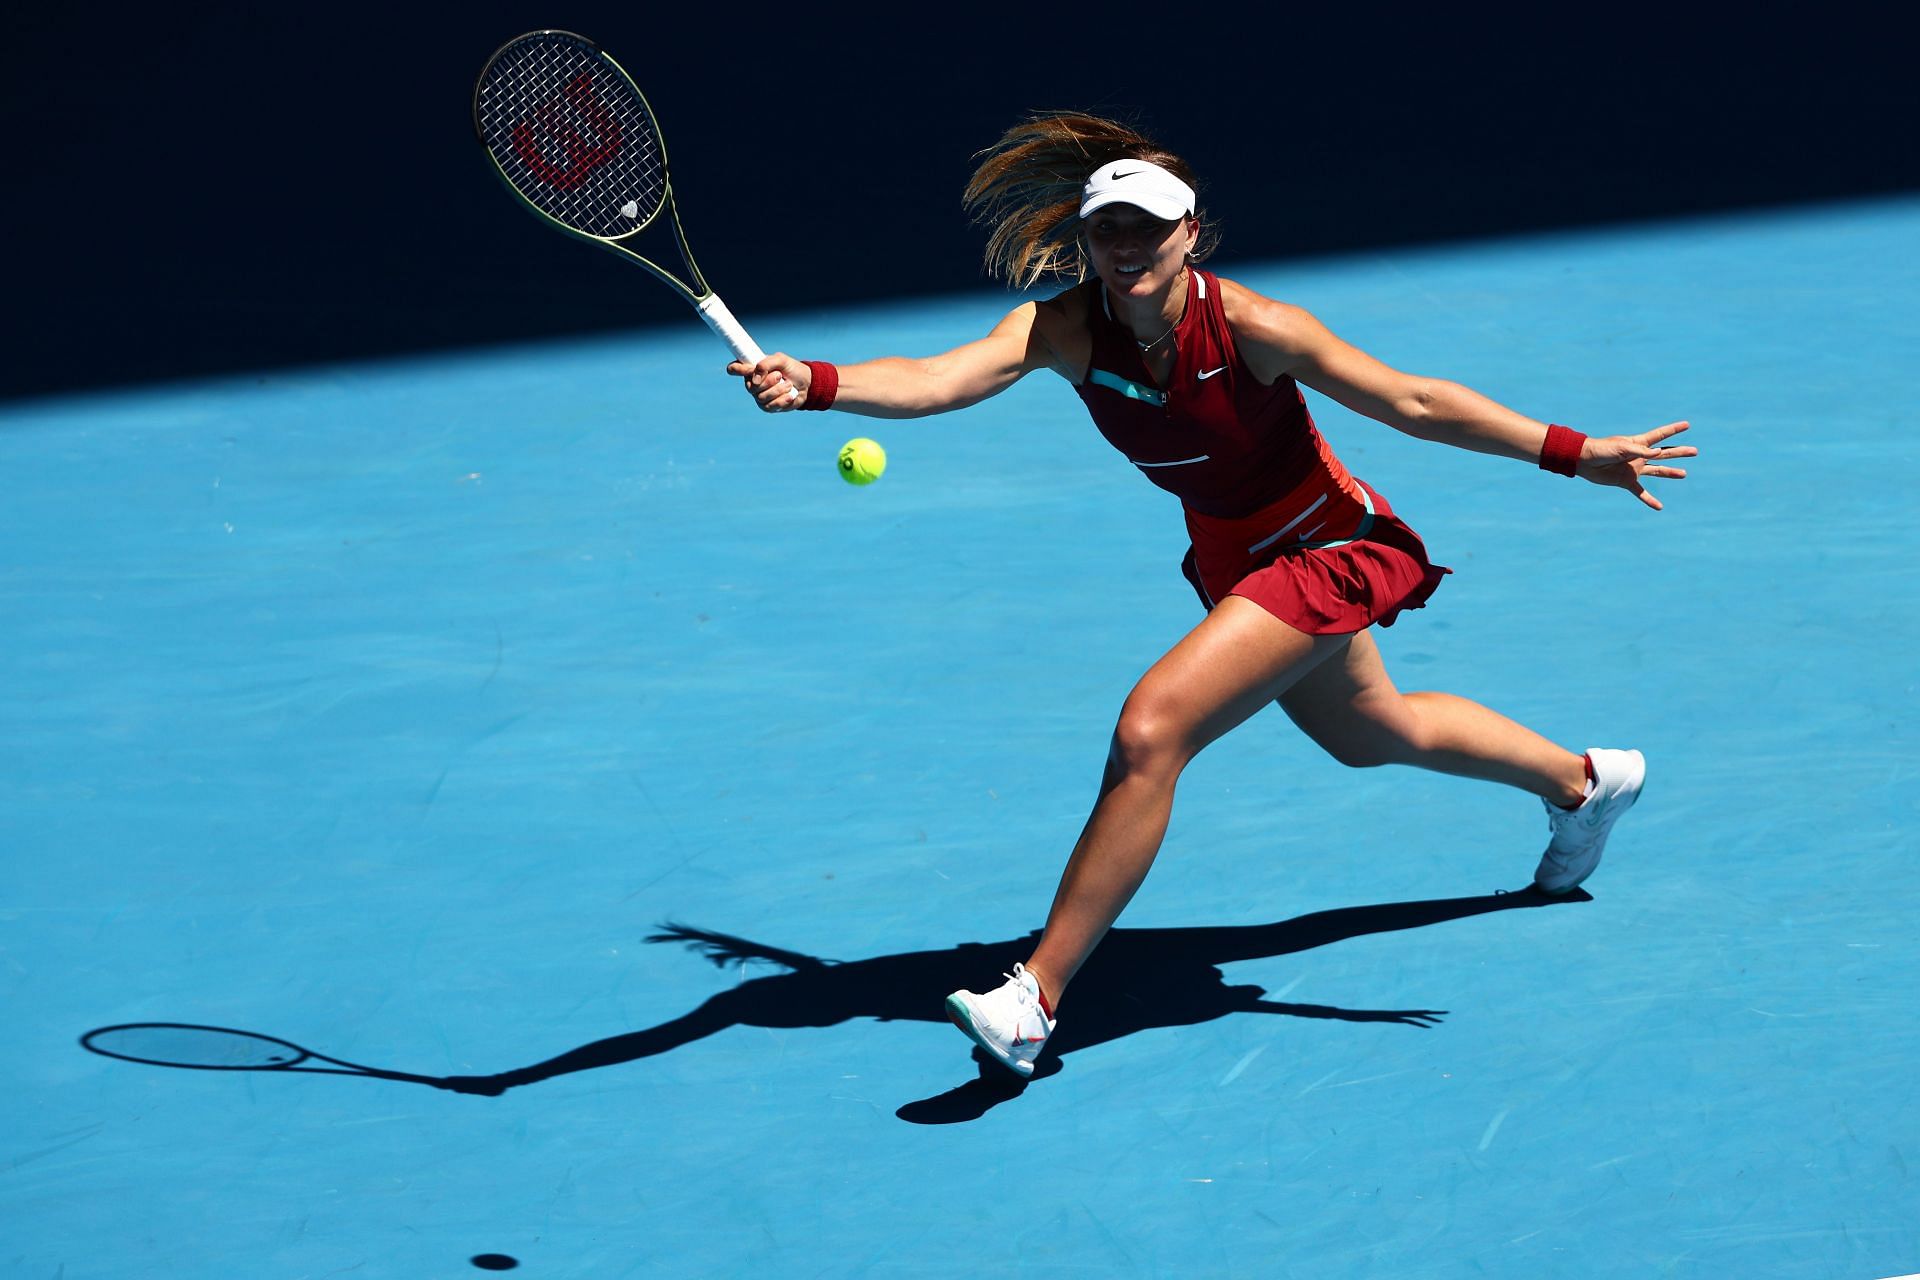 Paula Badosa takes on Madison Keys in the fourth round of the 2022 Australian Open